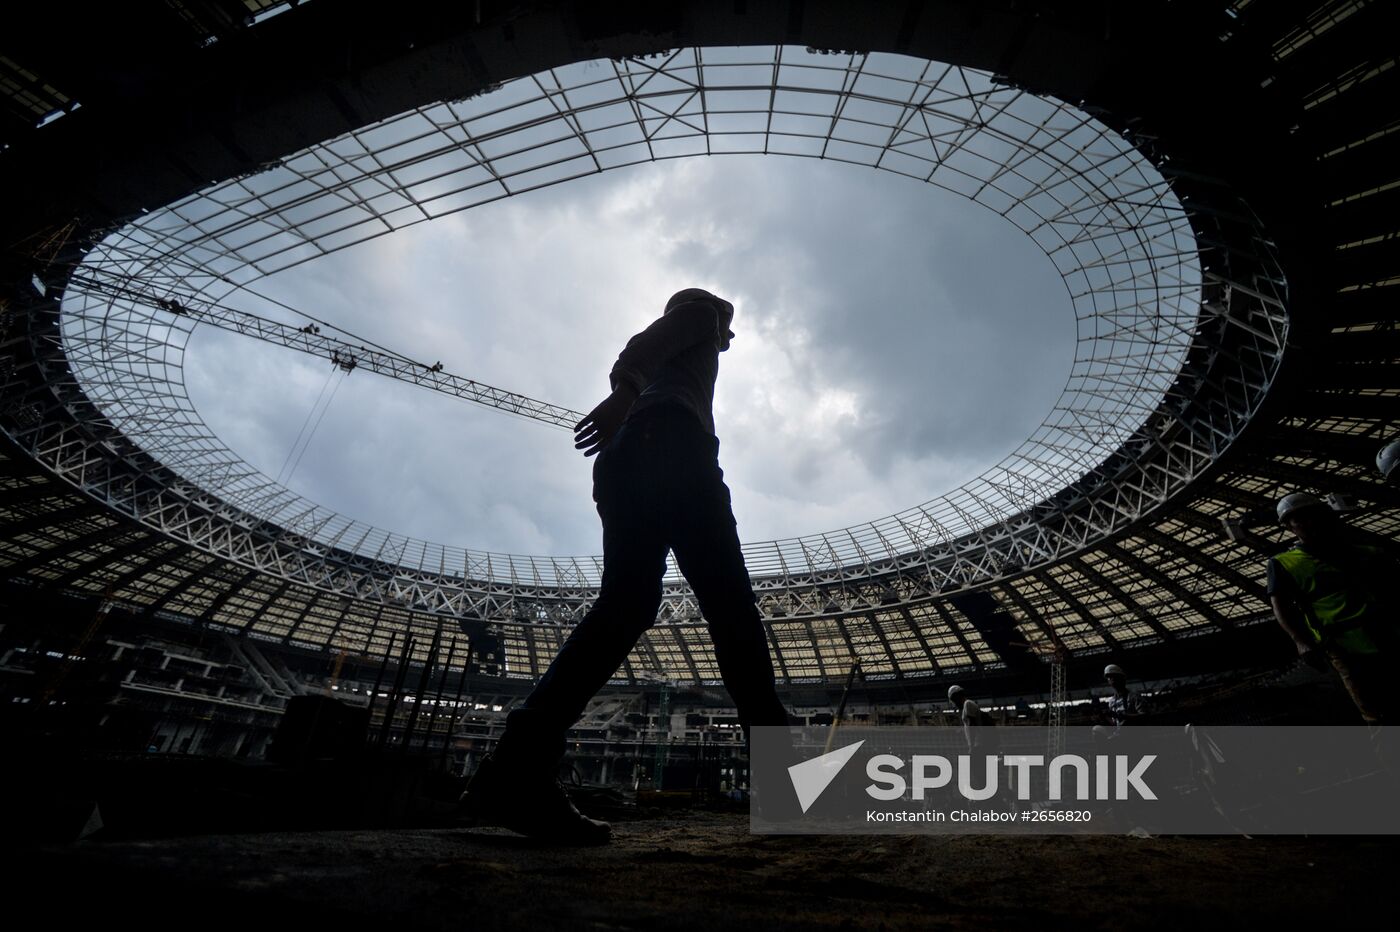 Luzhniki Arena construction